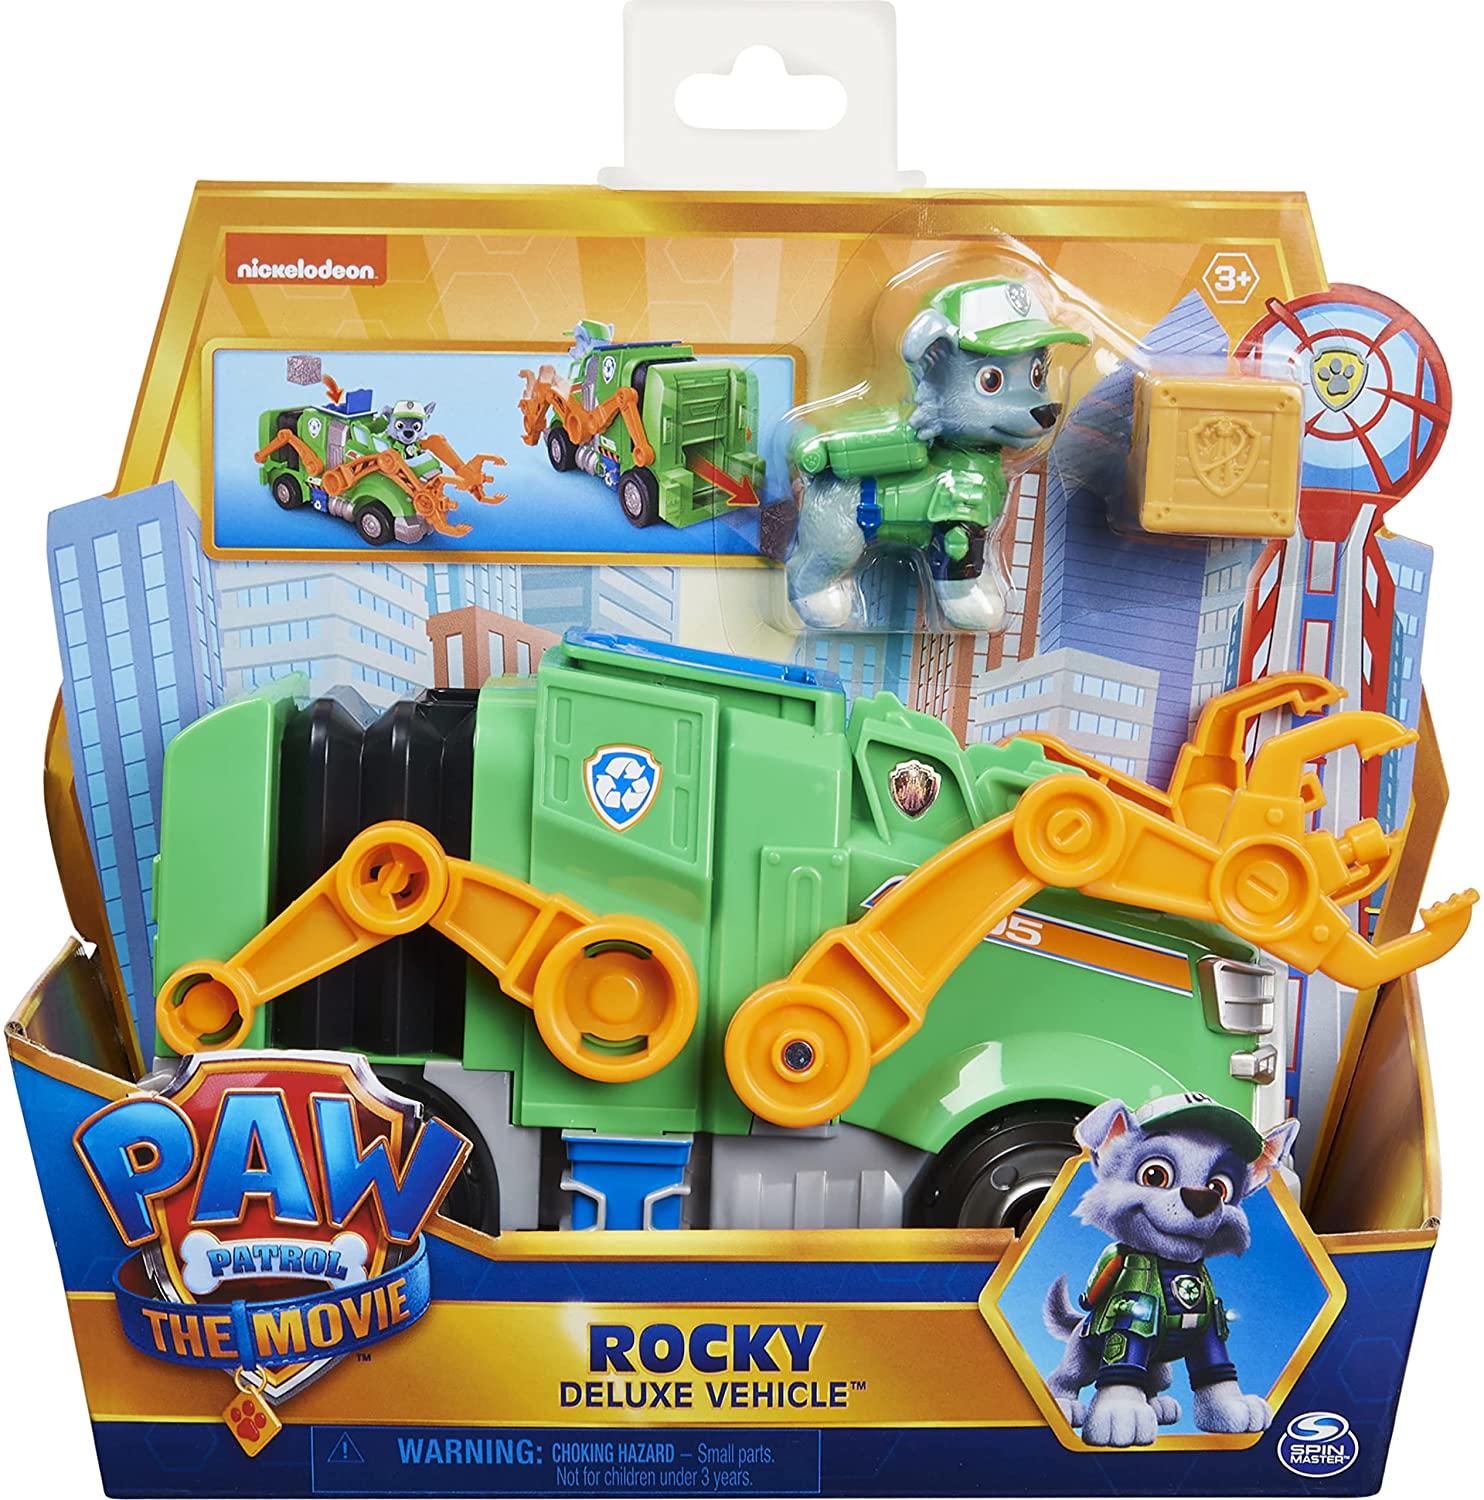 Paw Patrol The Movie Vehicle – Rocky